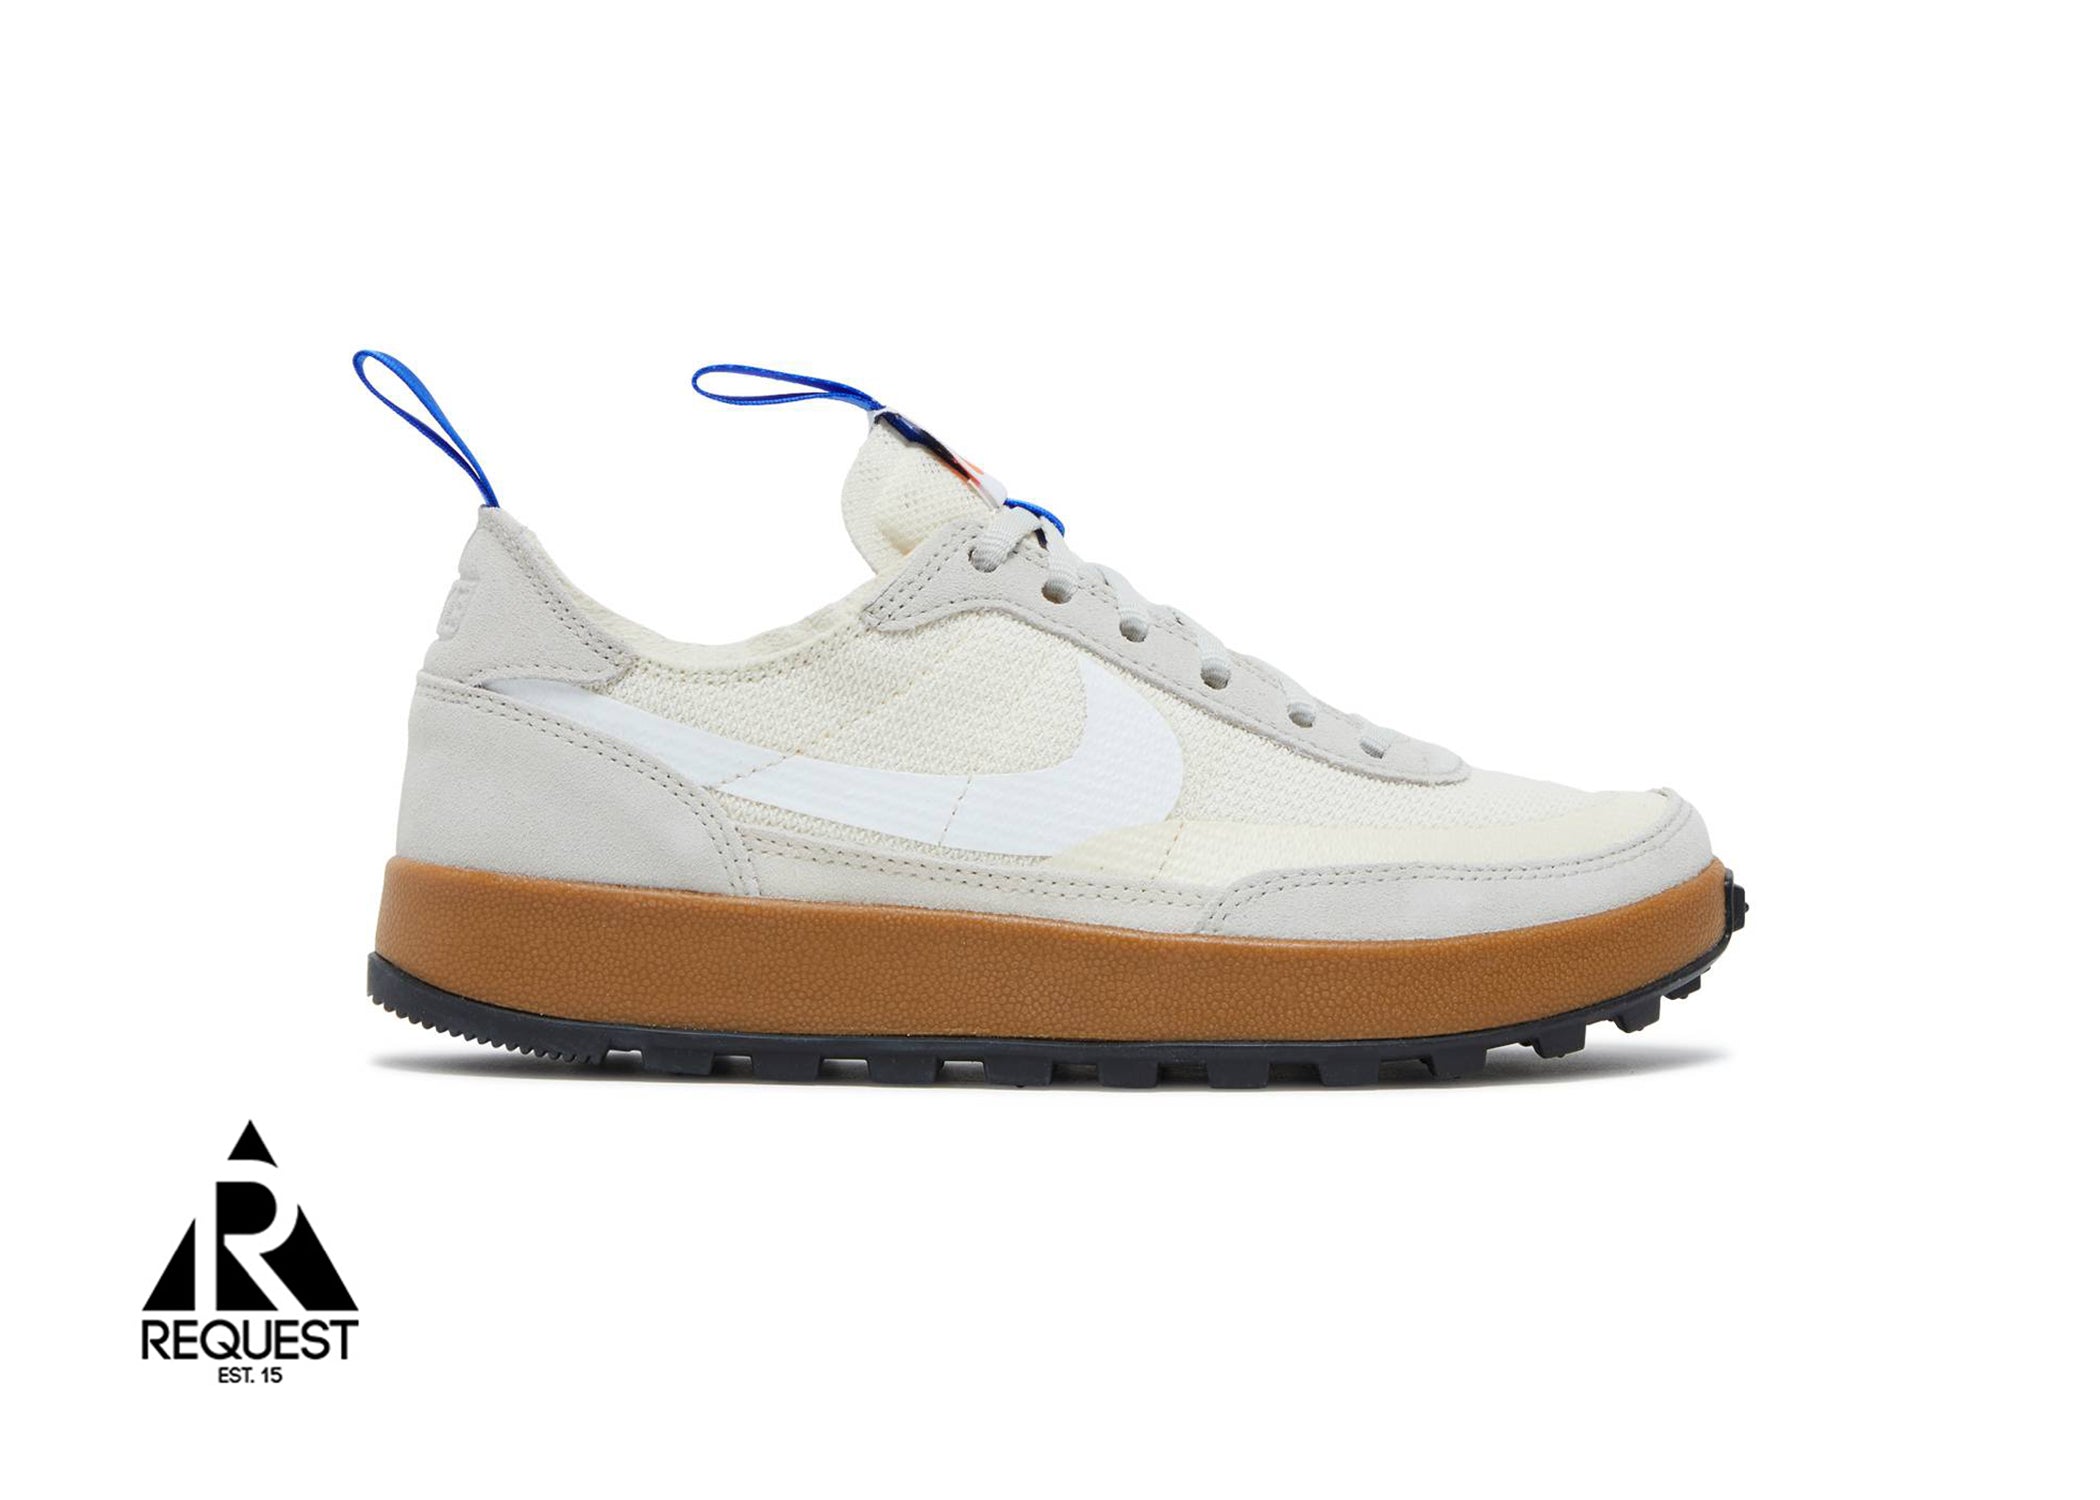 Nike General Purpose Shoe “Tom Sachs”